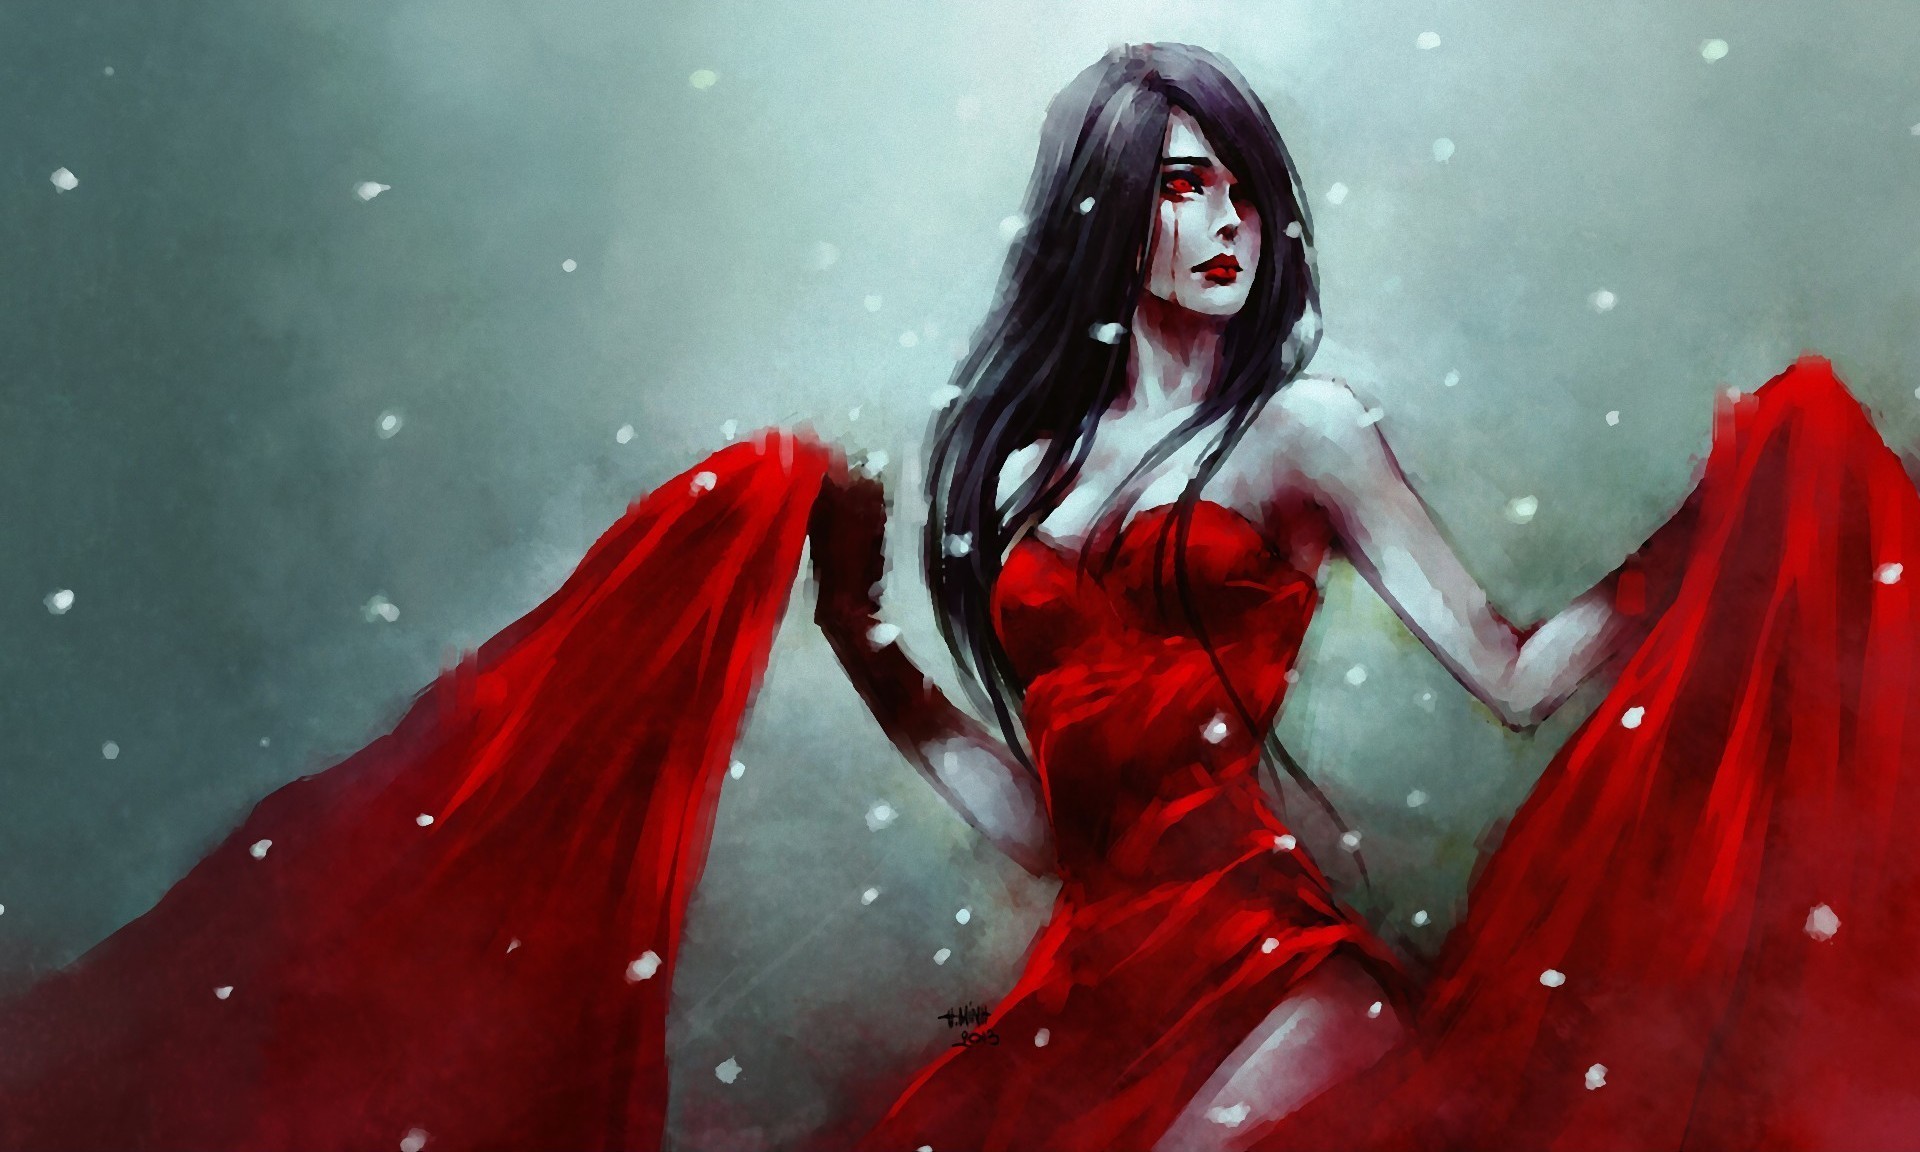 1920x1152 Vampire in red dress, the artist NanFe